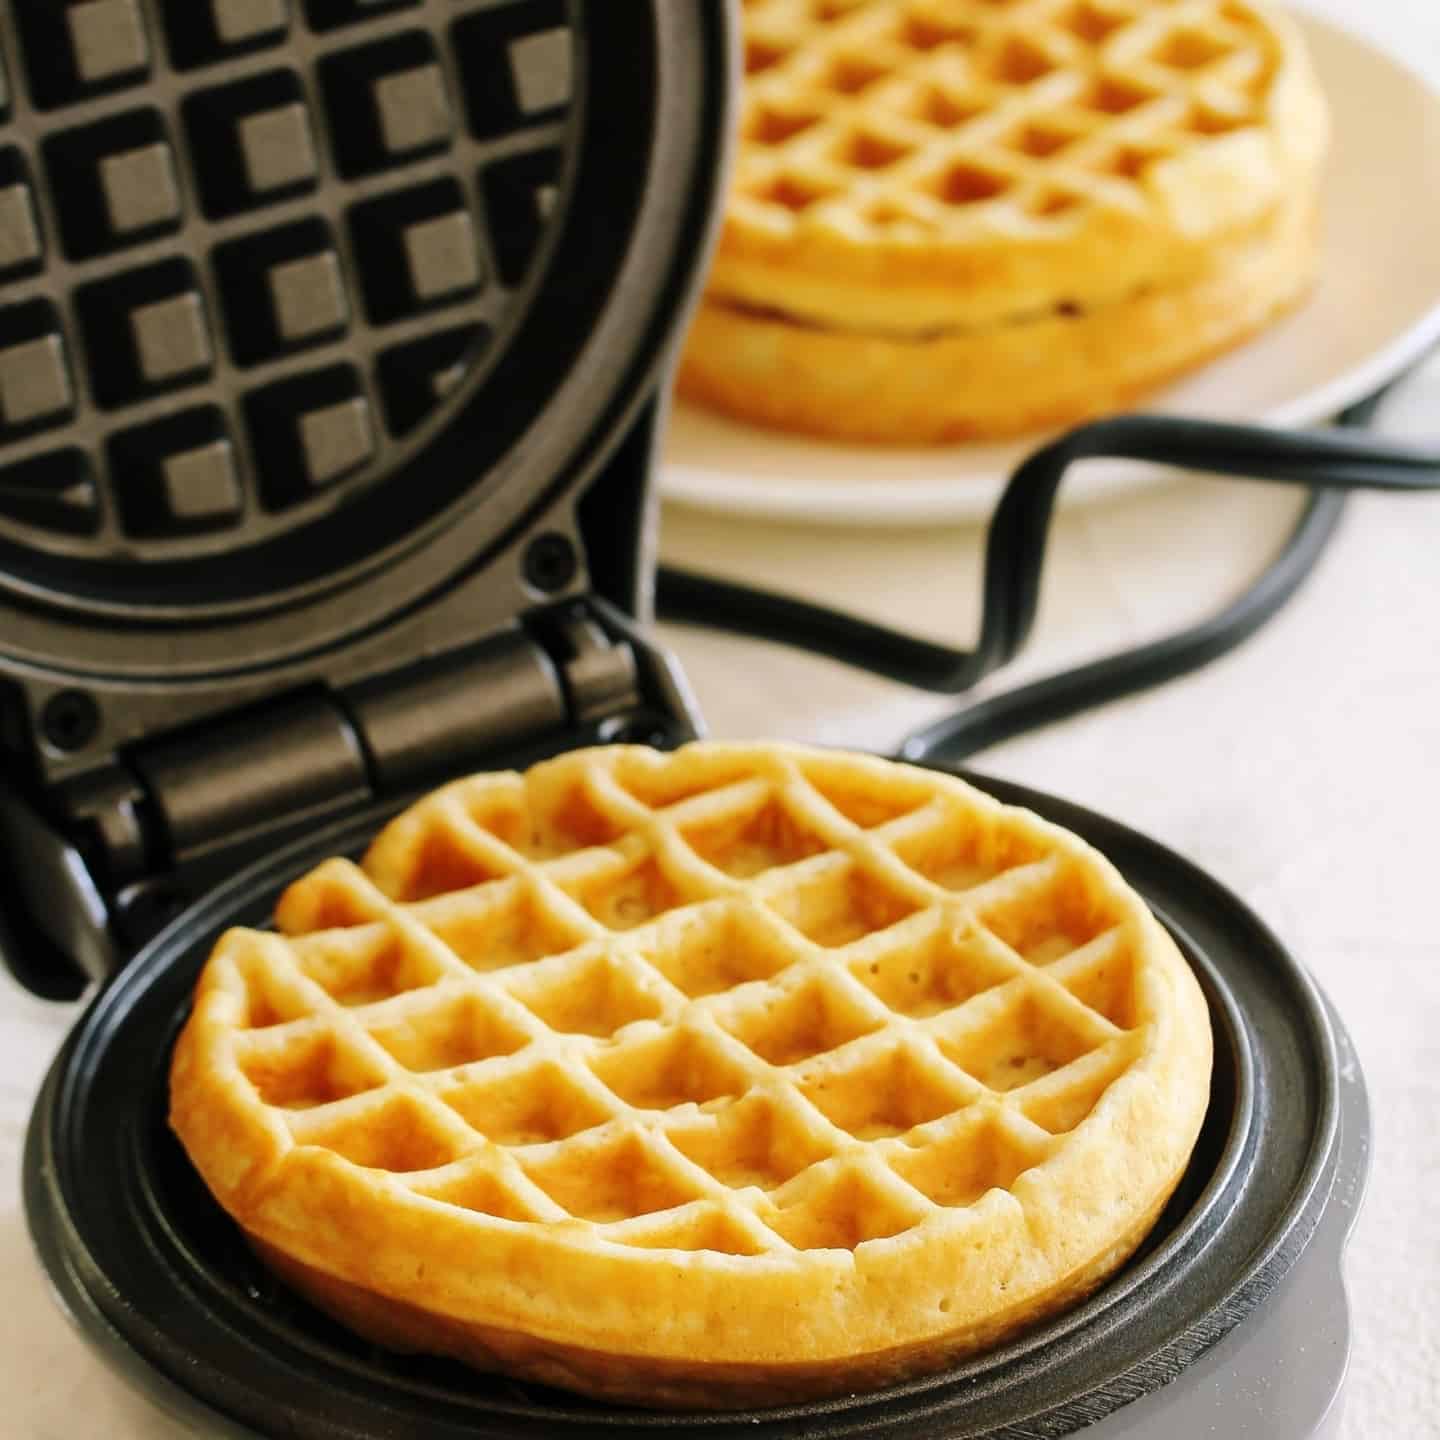 https://www.730sagestreet.com/wp-content/uploads/2022/10/Mini-Waffle-Maker-Recipes-Featured-1440x1440.jpg